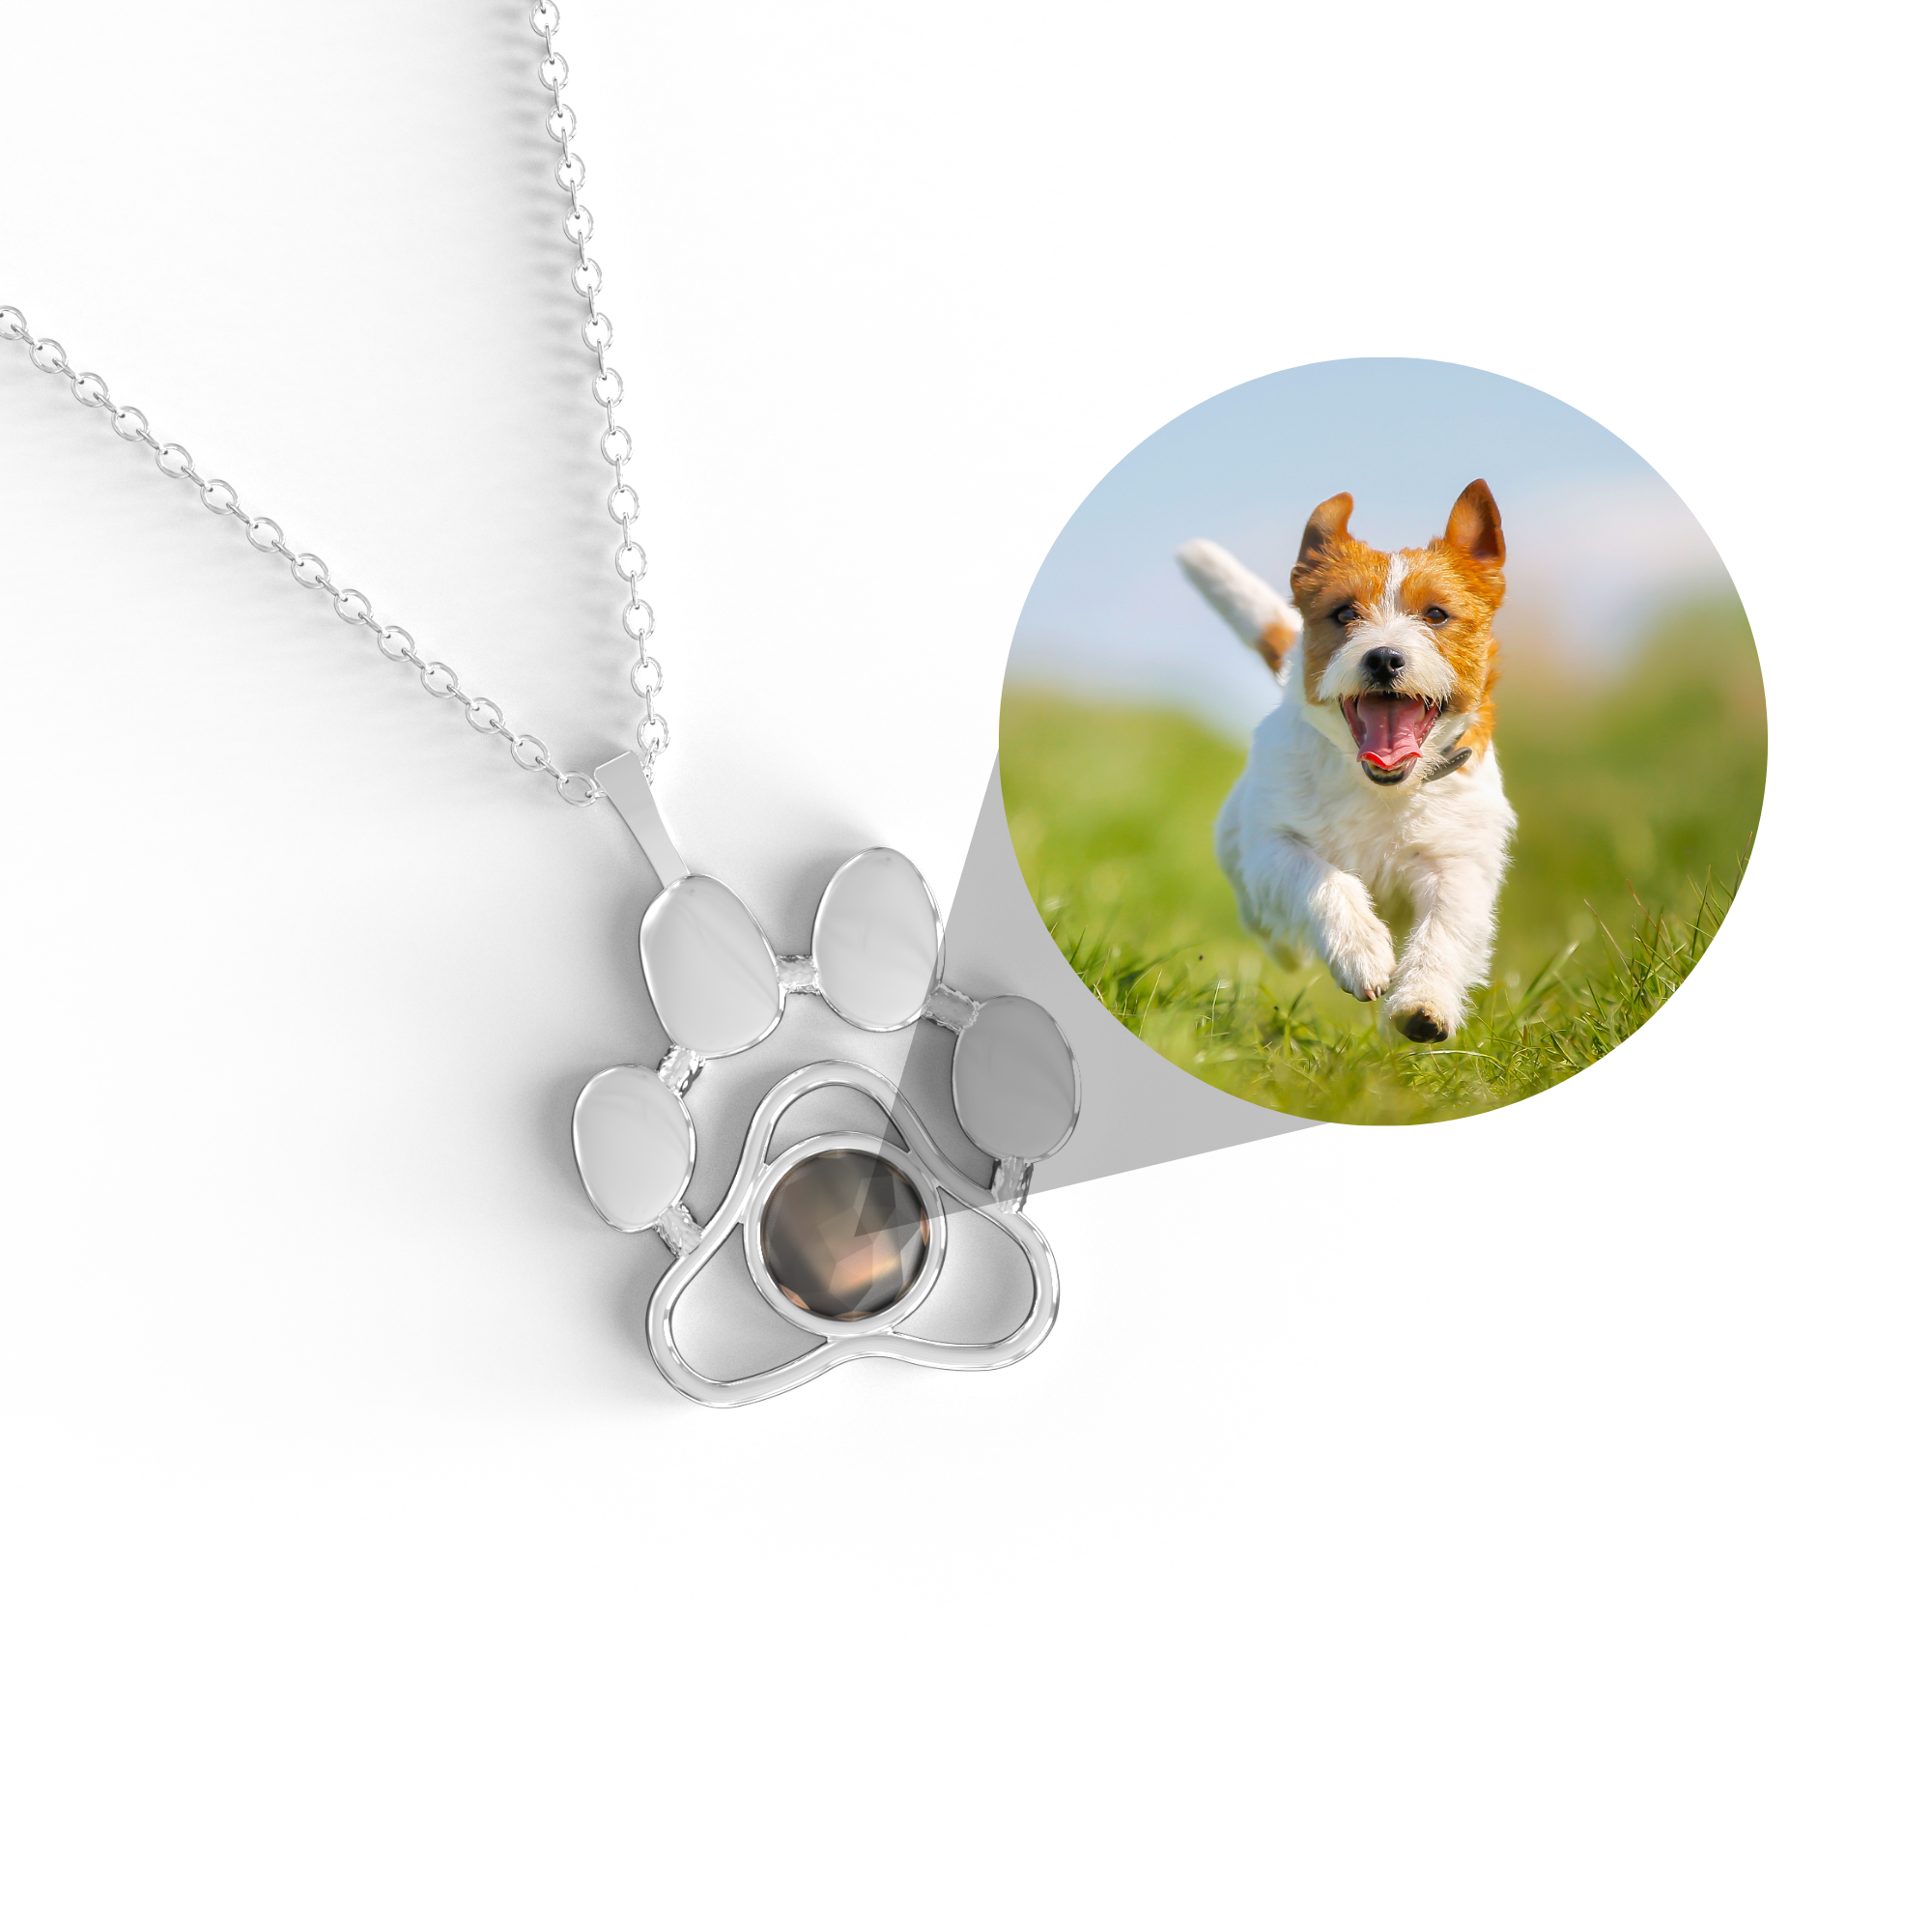 Personalized Pet Jewelry | Pawprint Noseprint Jewelry | Bailey and Bailey